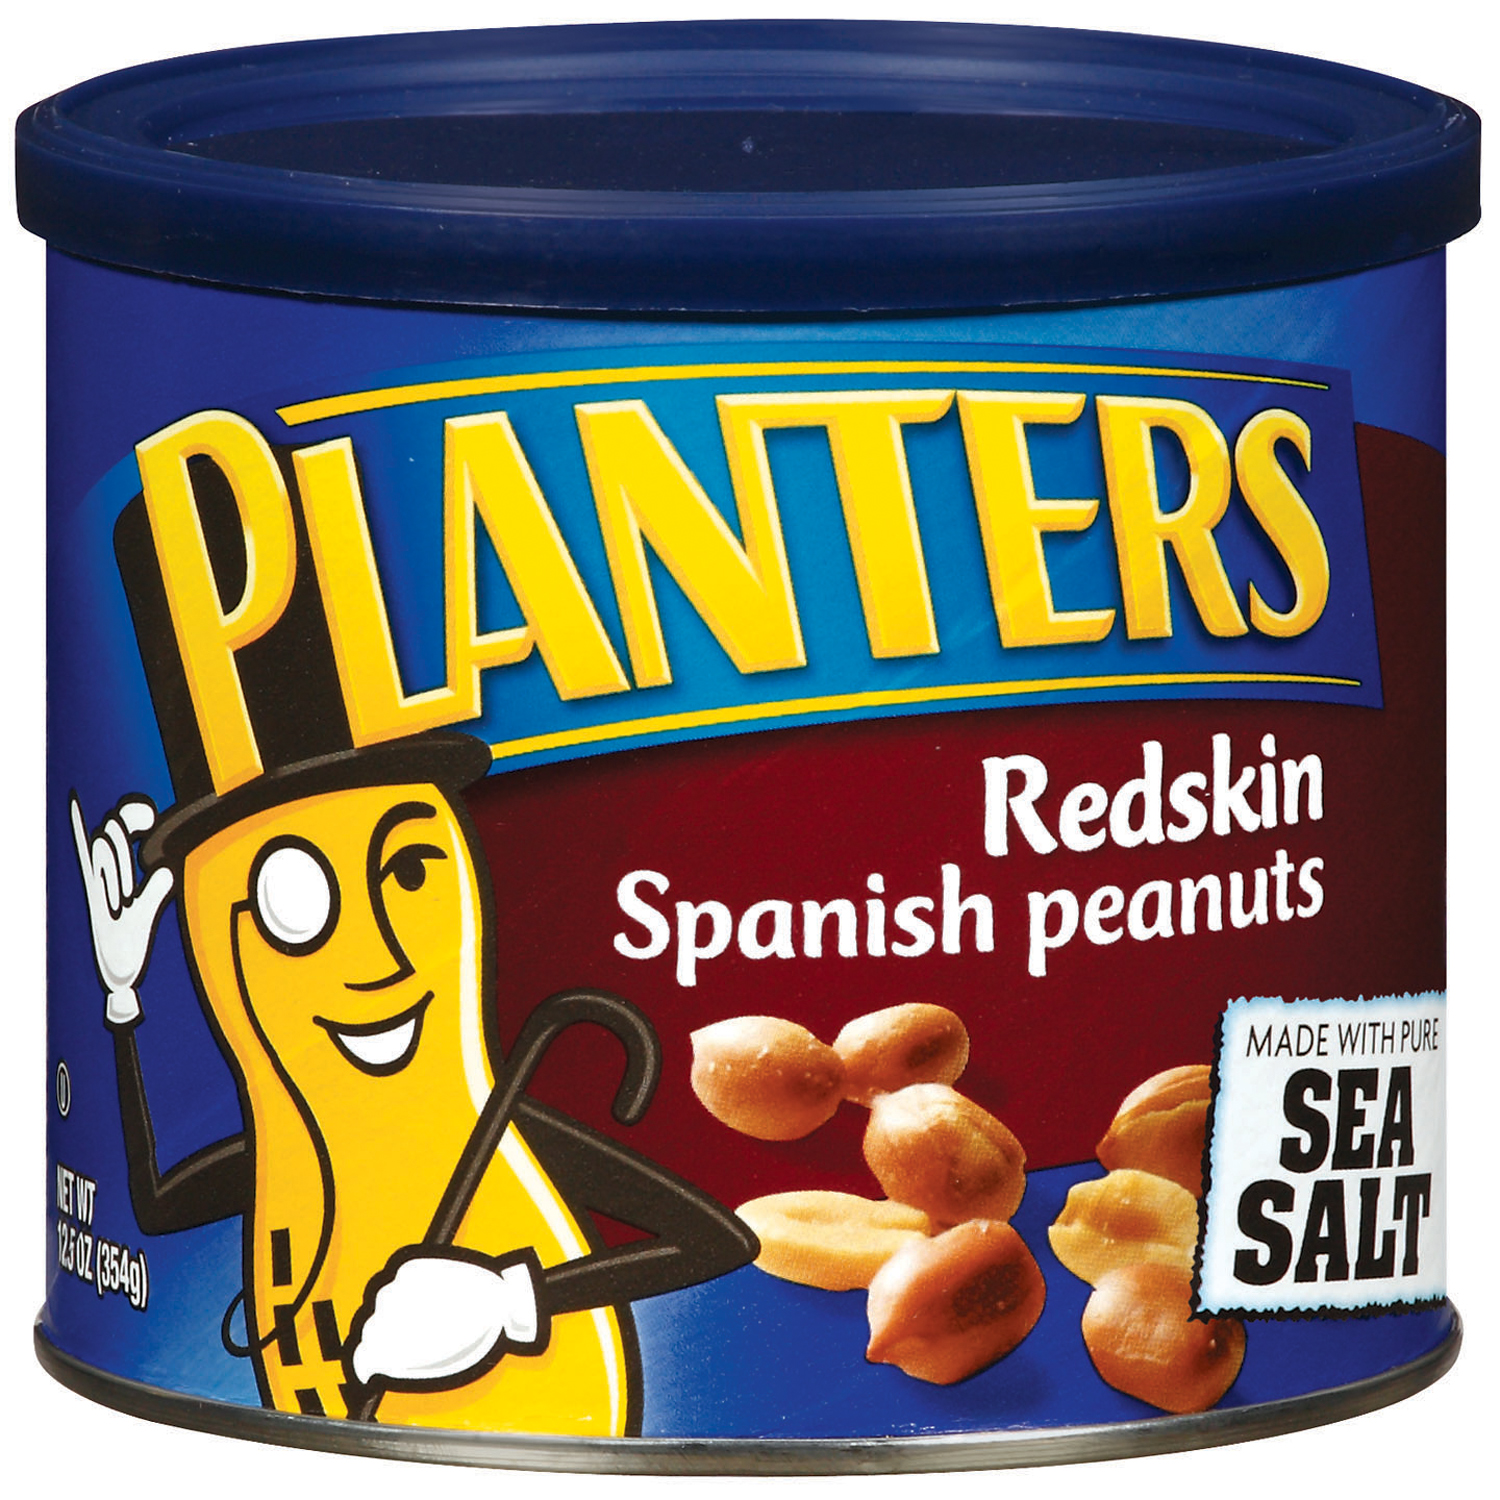 Planters Spanish Redskin W/Sea Salt Peanuts - Food & Grocery - Snacks - Nuts, Seeds ...